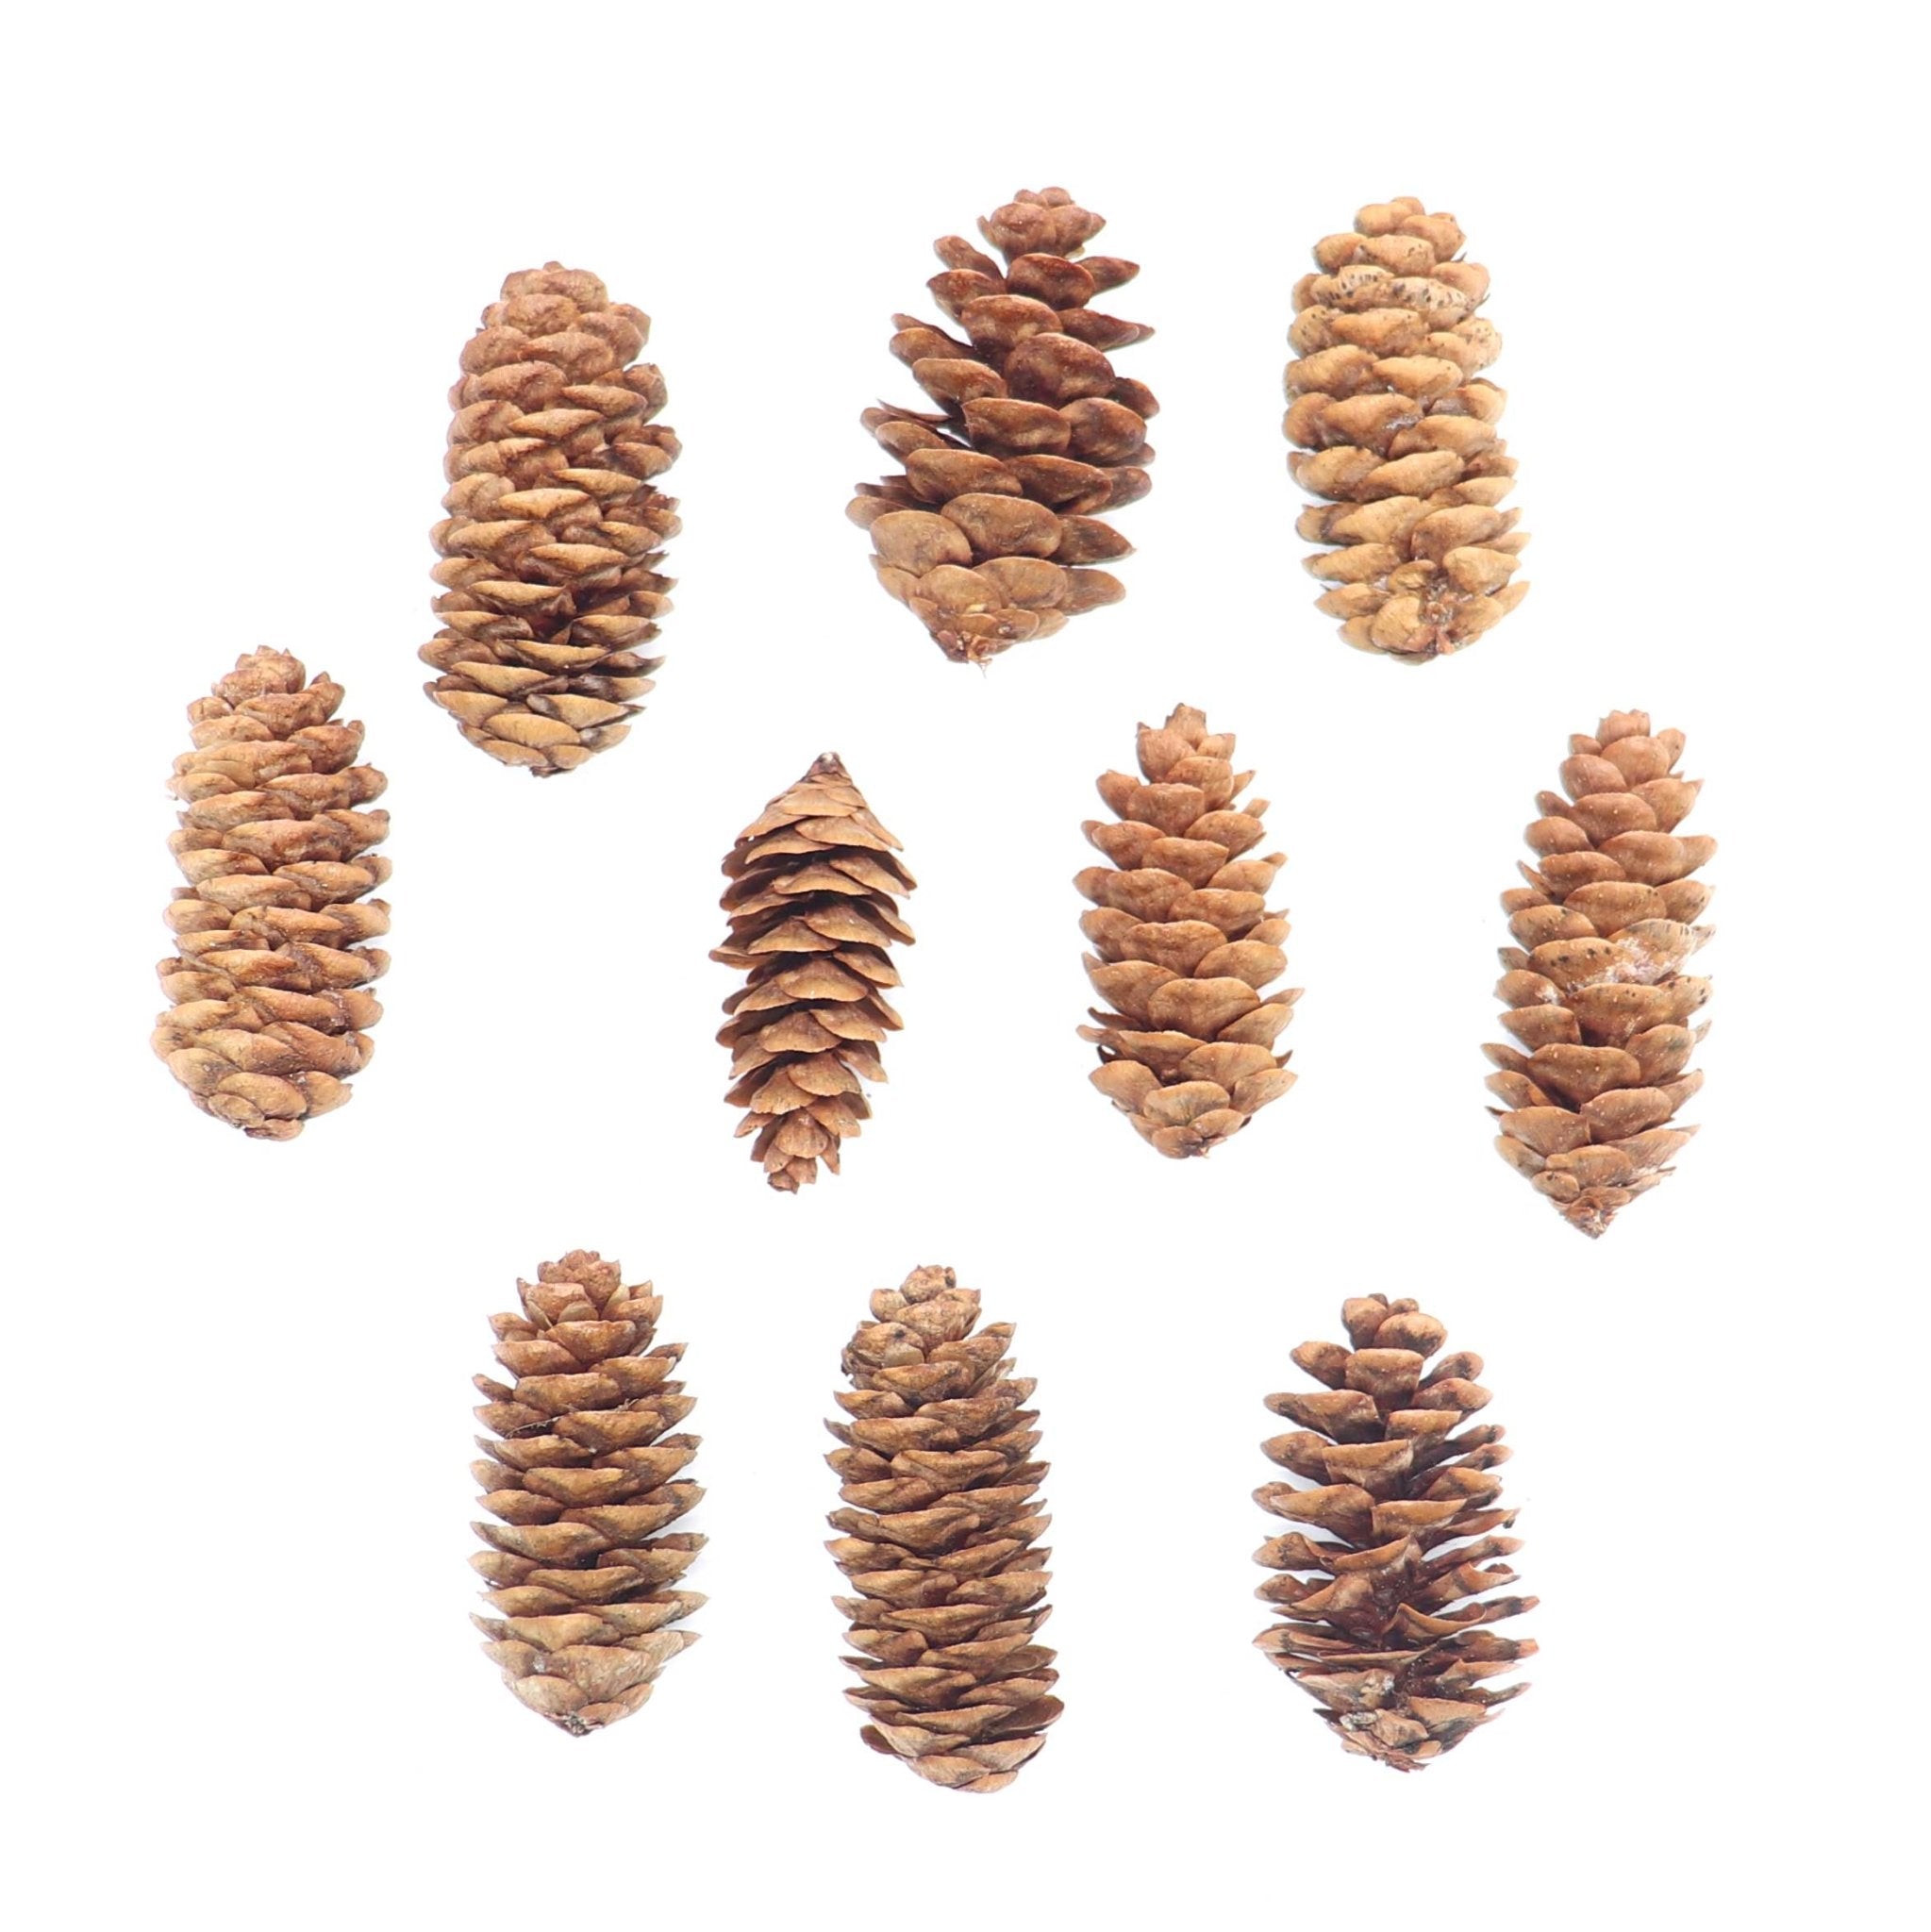 50 Miniature Pine Cones, Clean, Heat Treated, Tiny Pine Cones, Hemlock, NEW